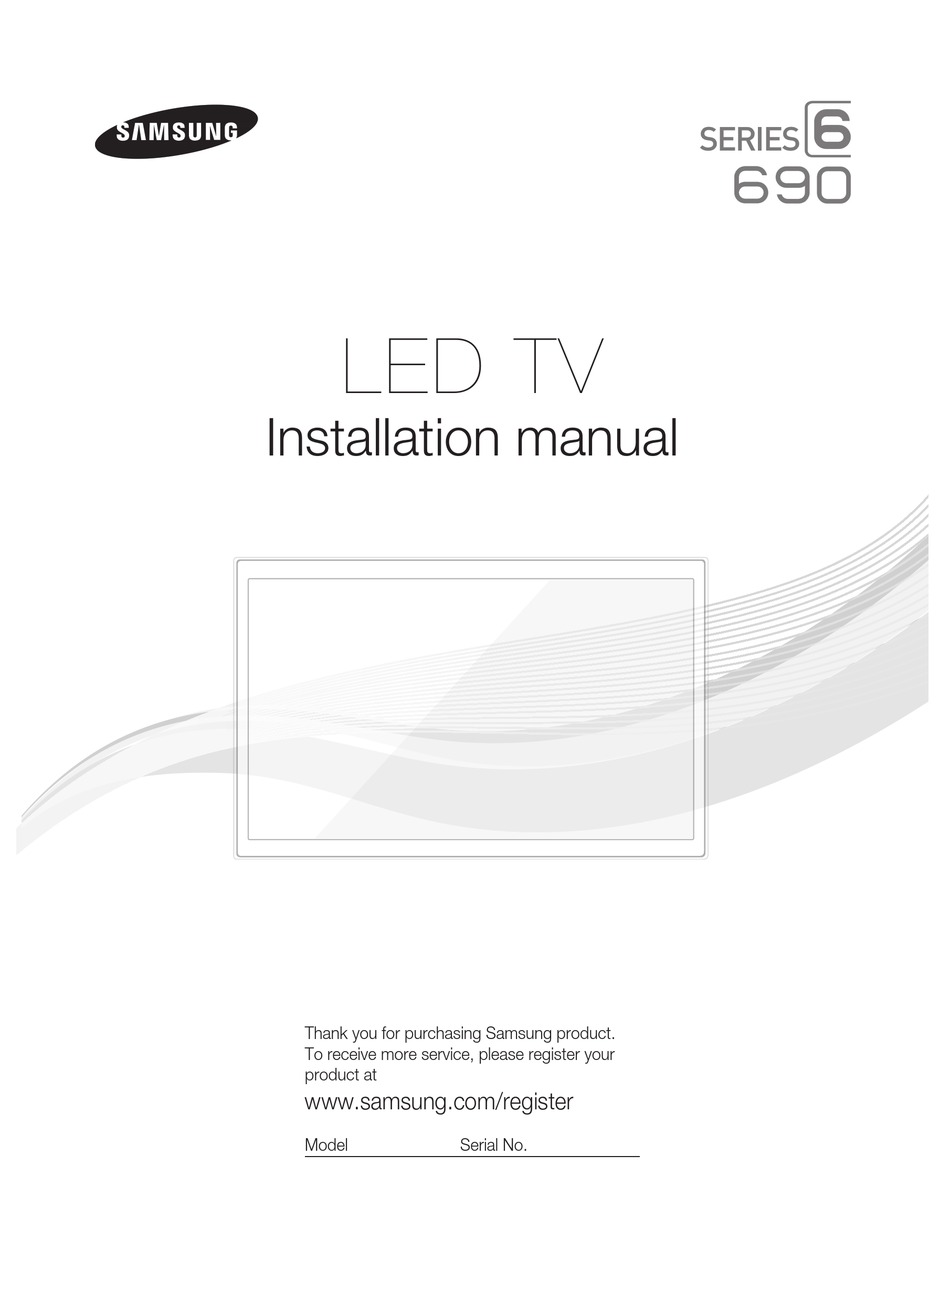 SAMSUNG 690 INSTALLATION MANUAL Pdf Download | ManualsLib